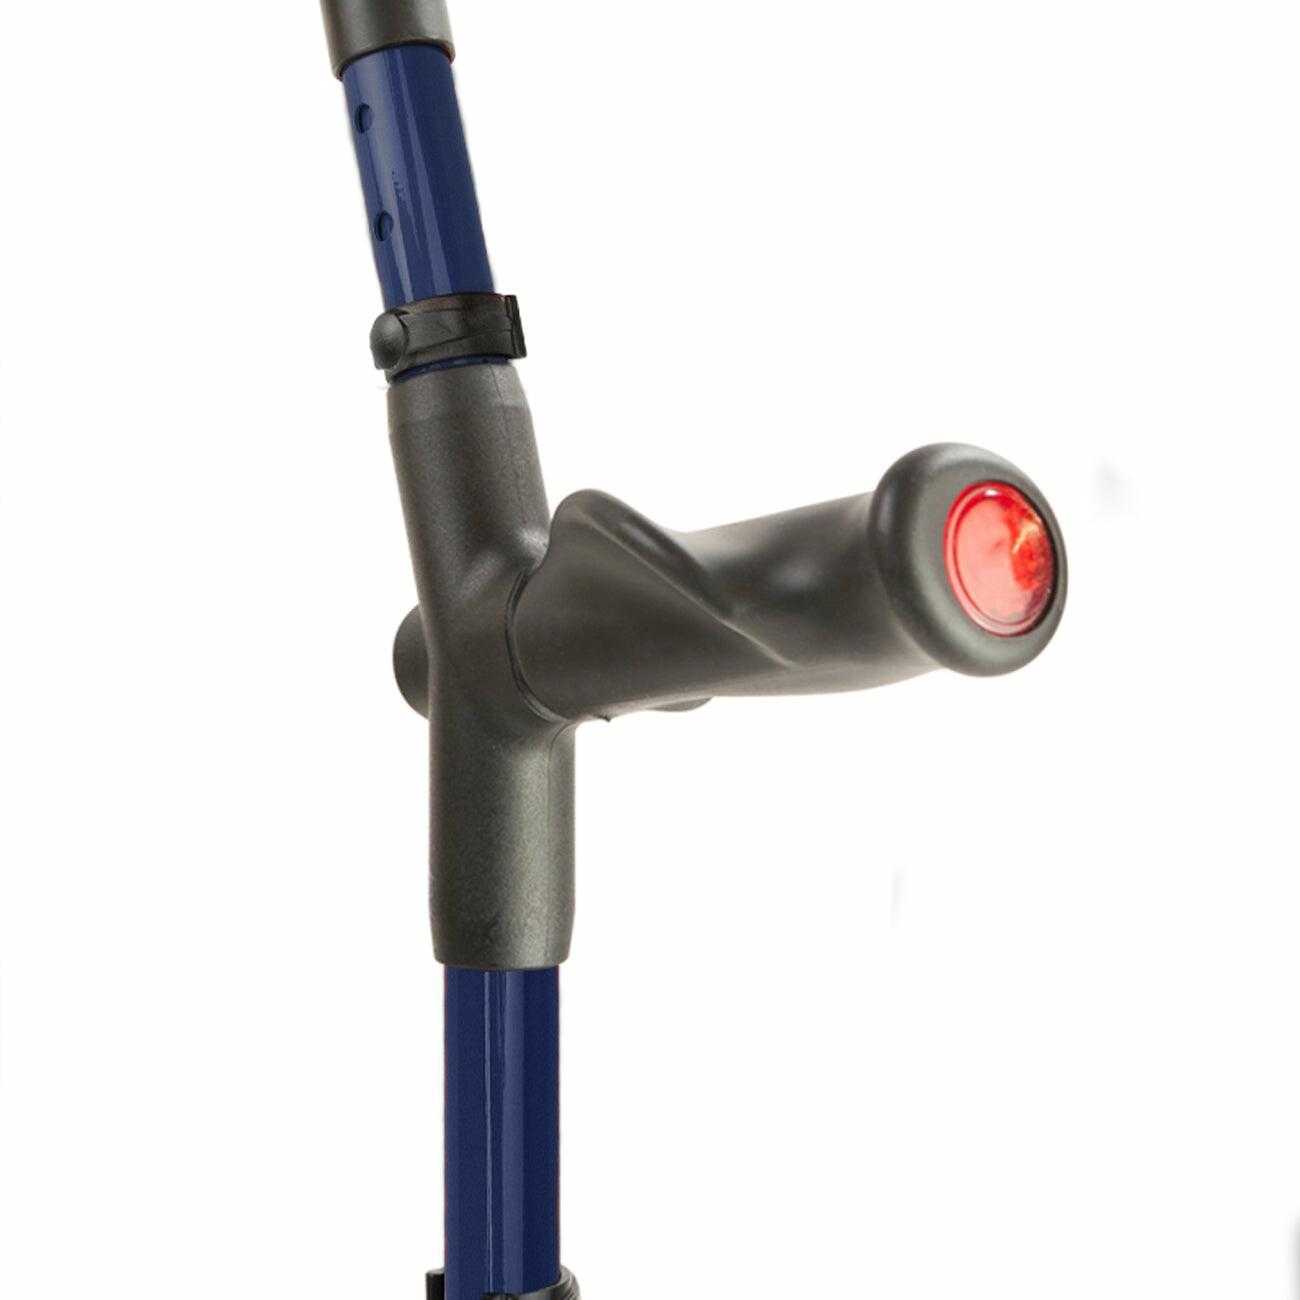 Comfort grip handle of the blue Flexyfoot Comfort Grip Double Adjustable Crutch